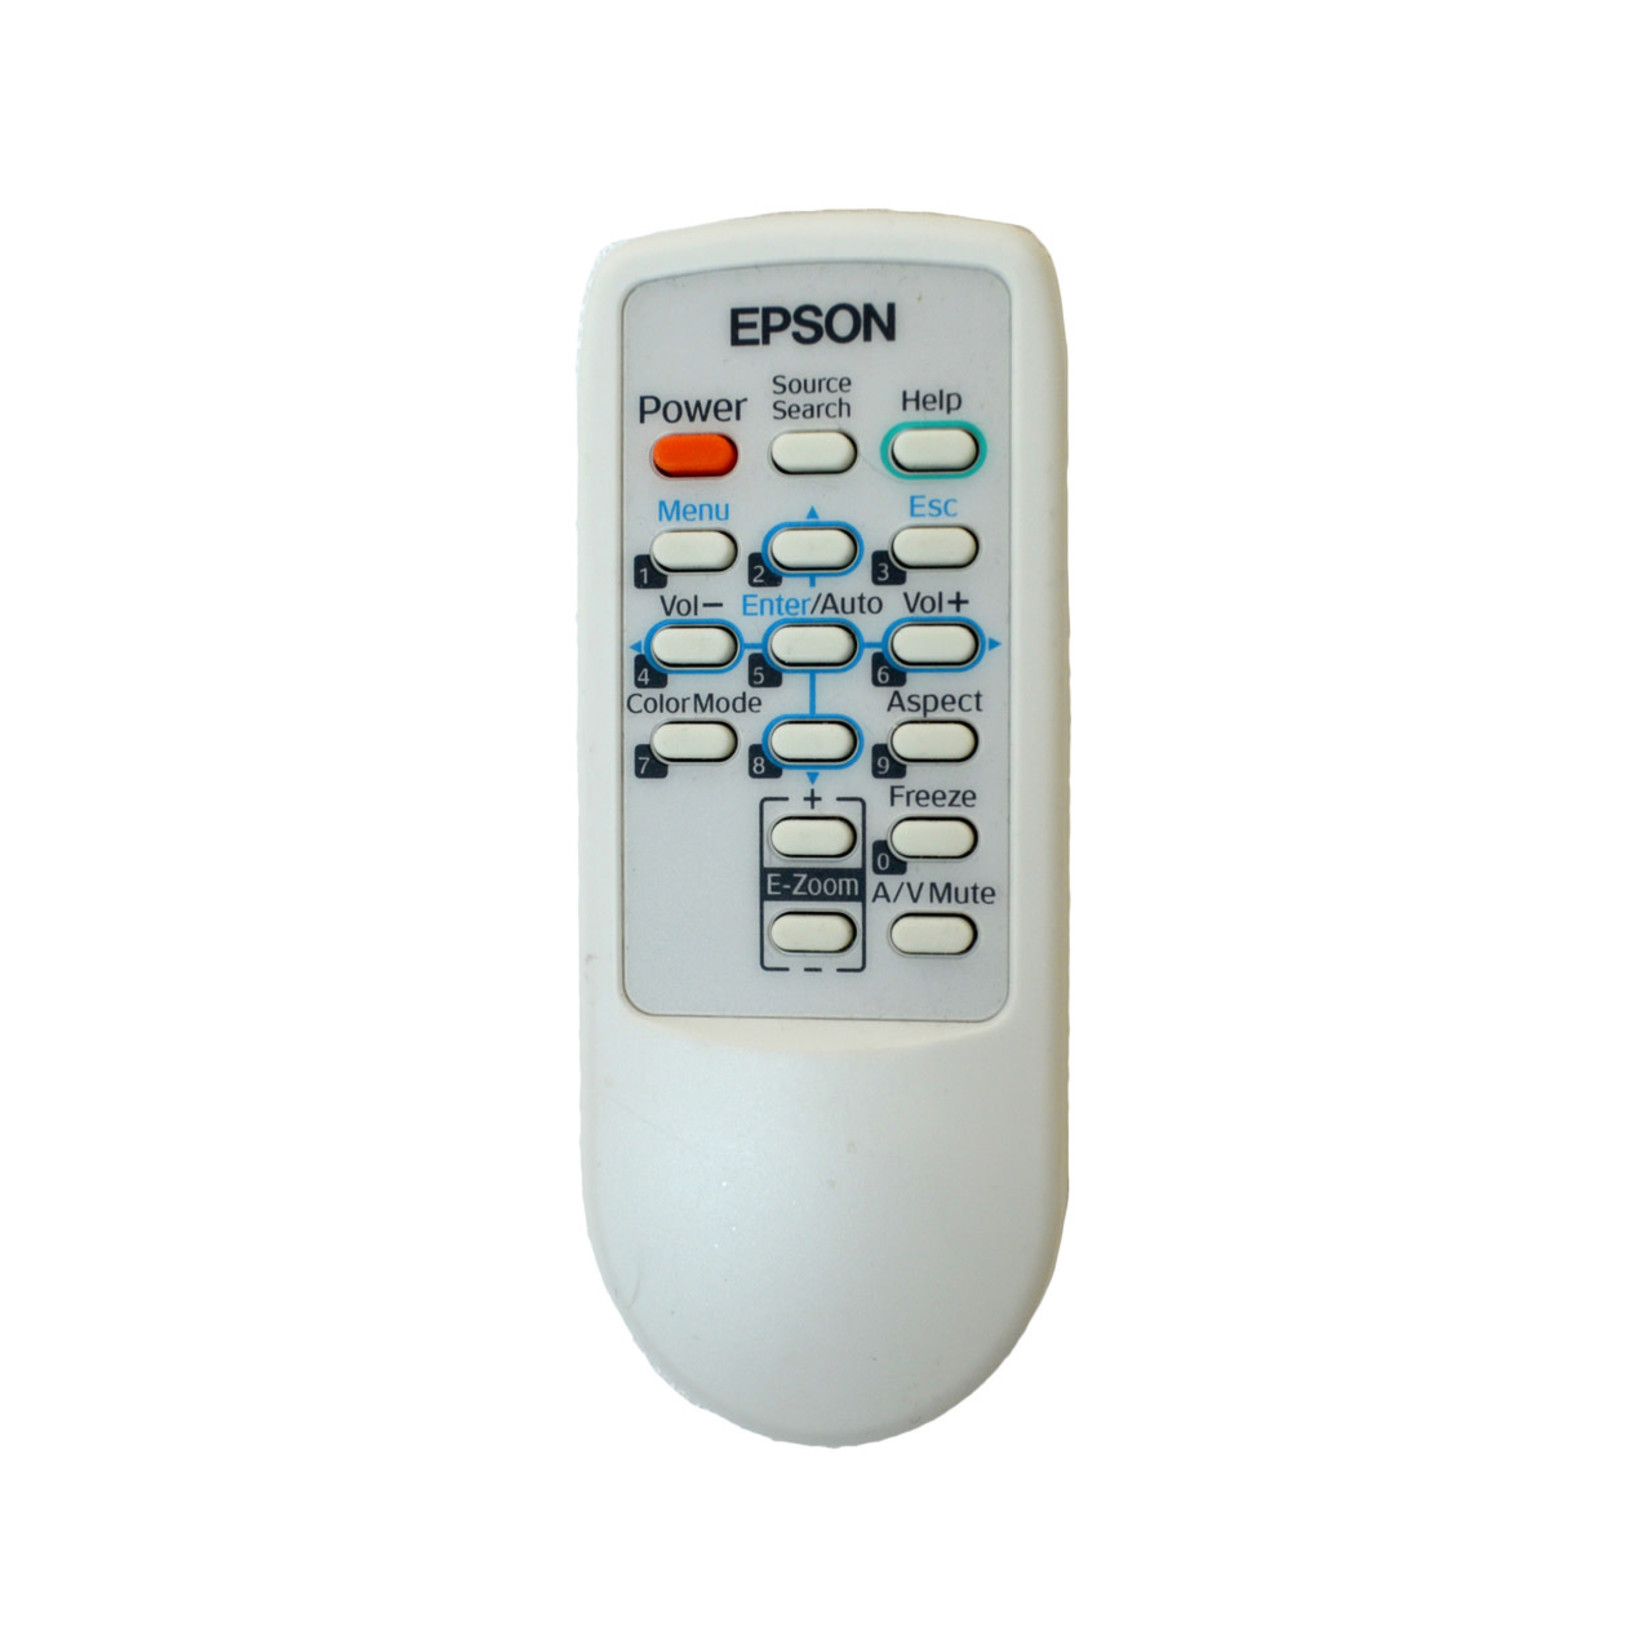 Epson Projector Universal Remote